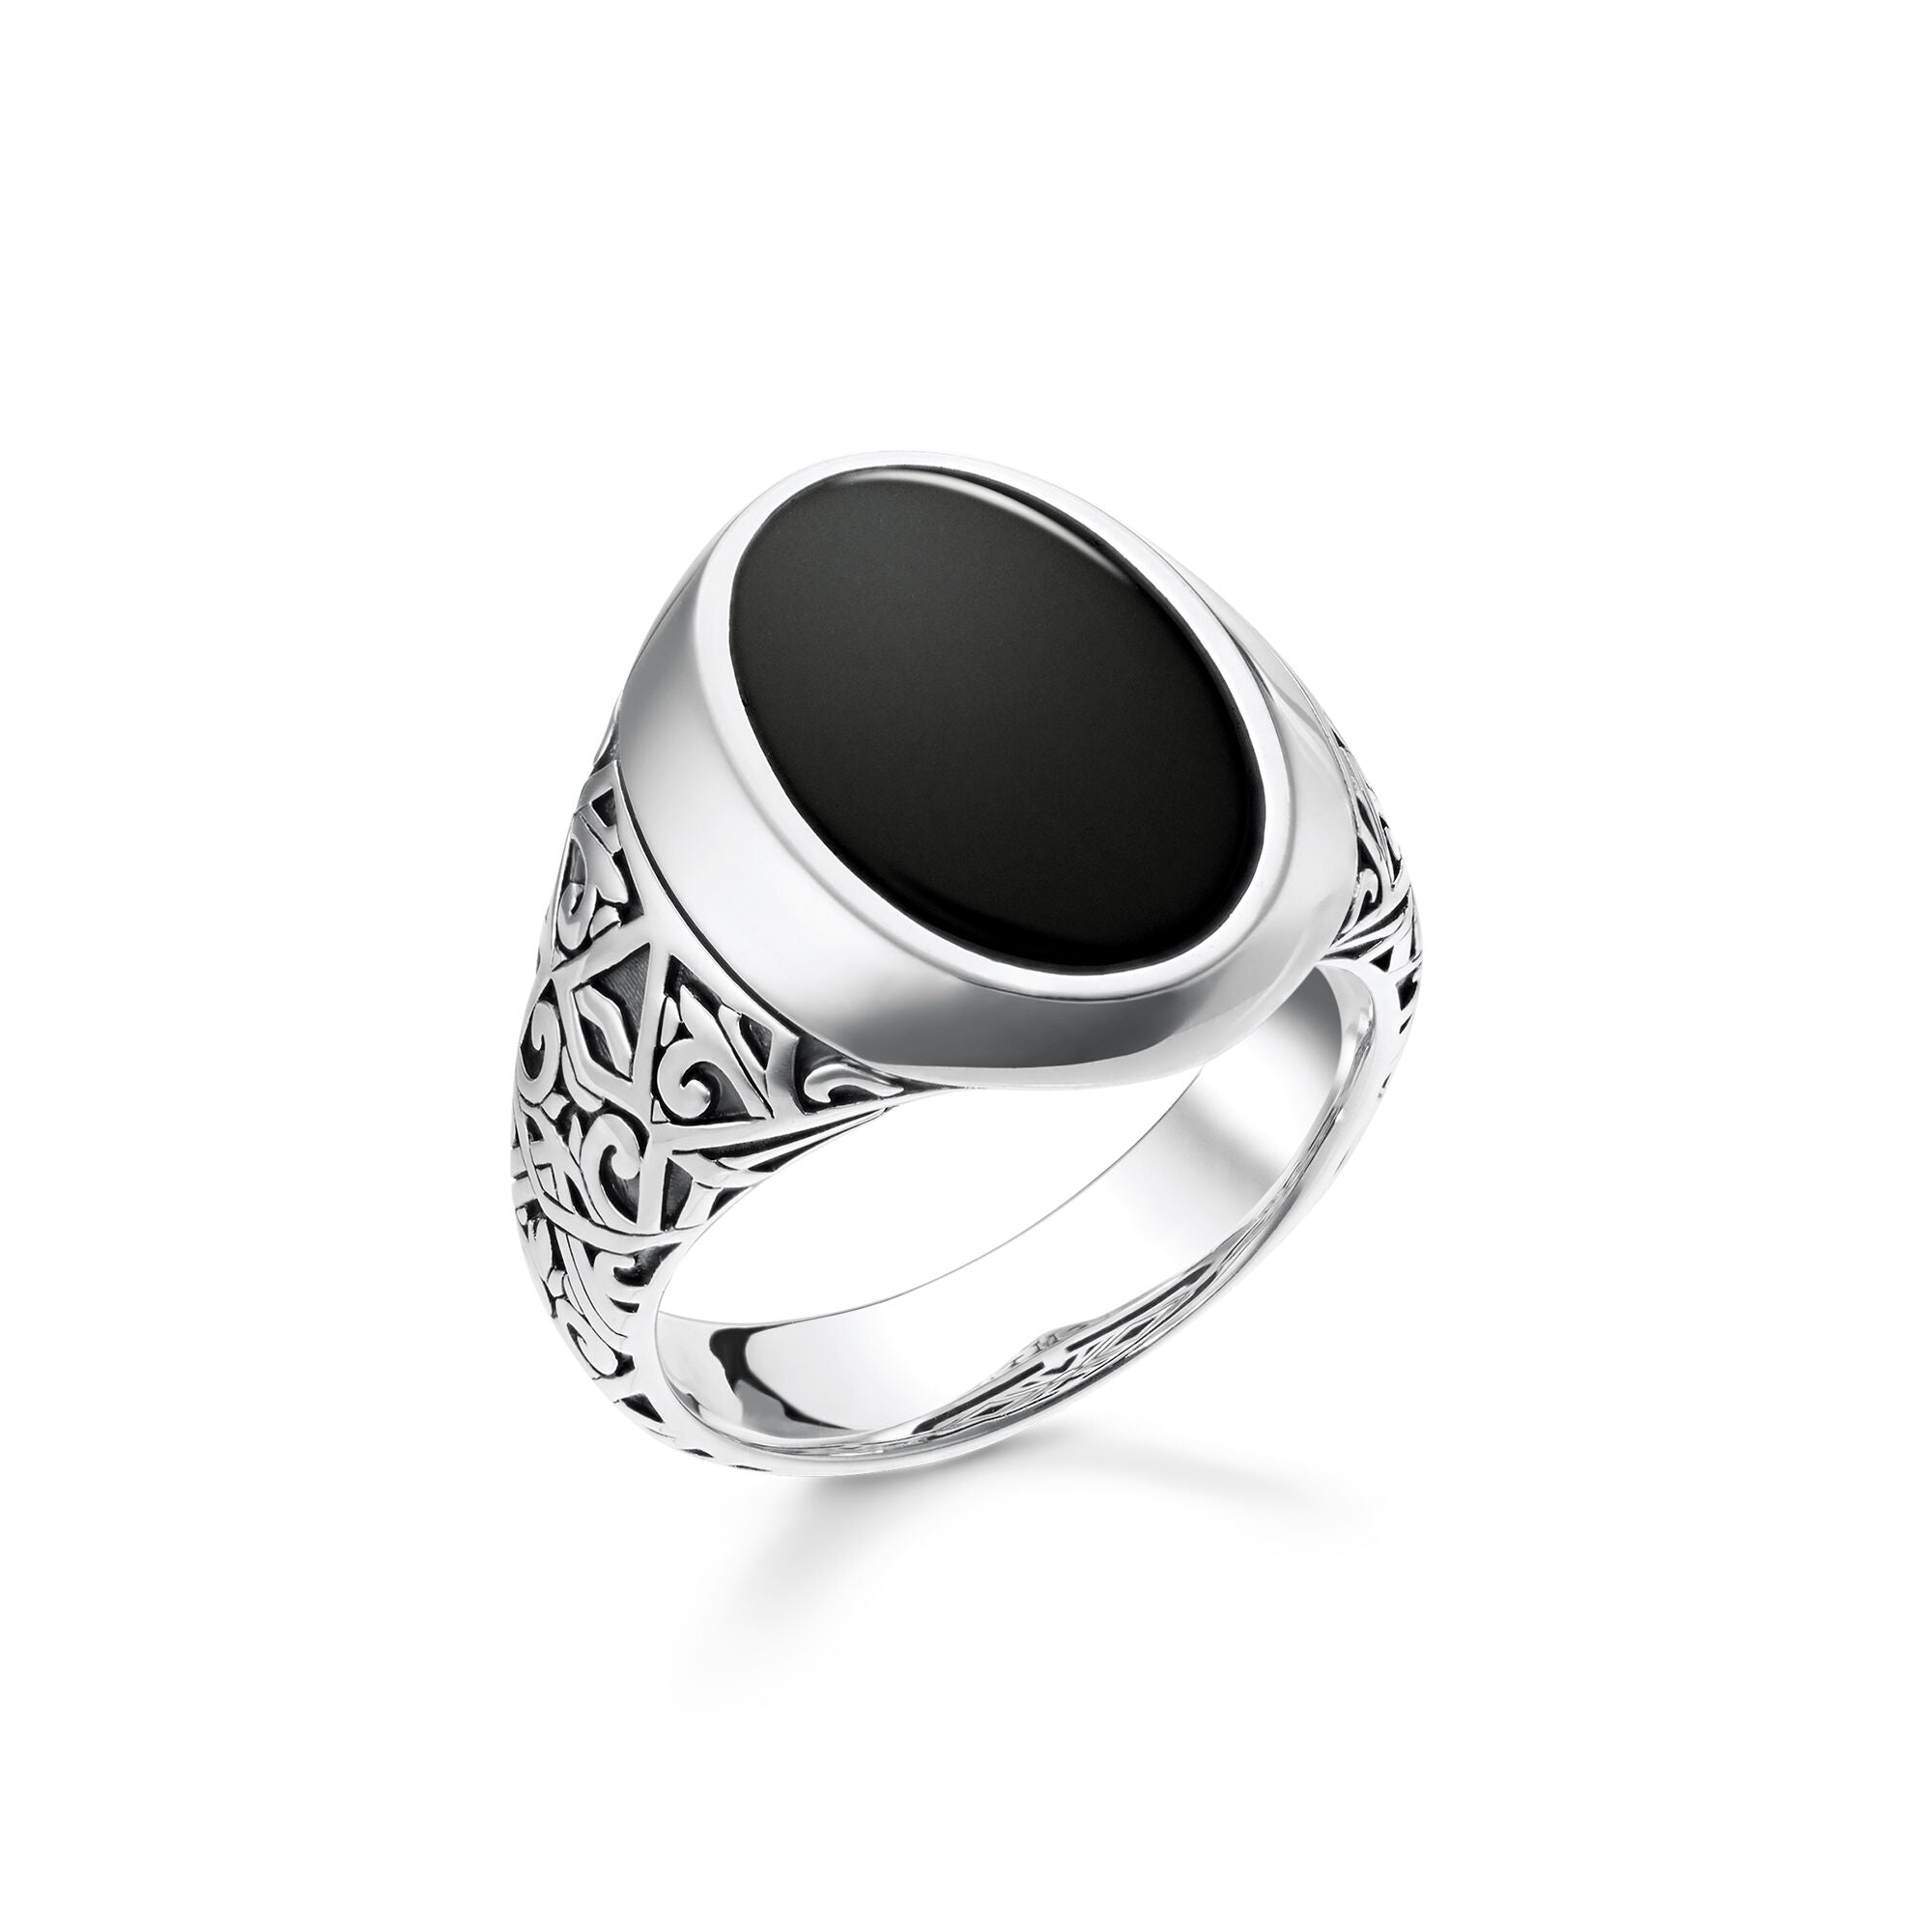 Thomas Sabo Rebel At Heart Sterling Silver Black Onyx Signet Ring